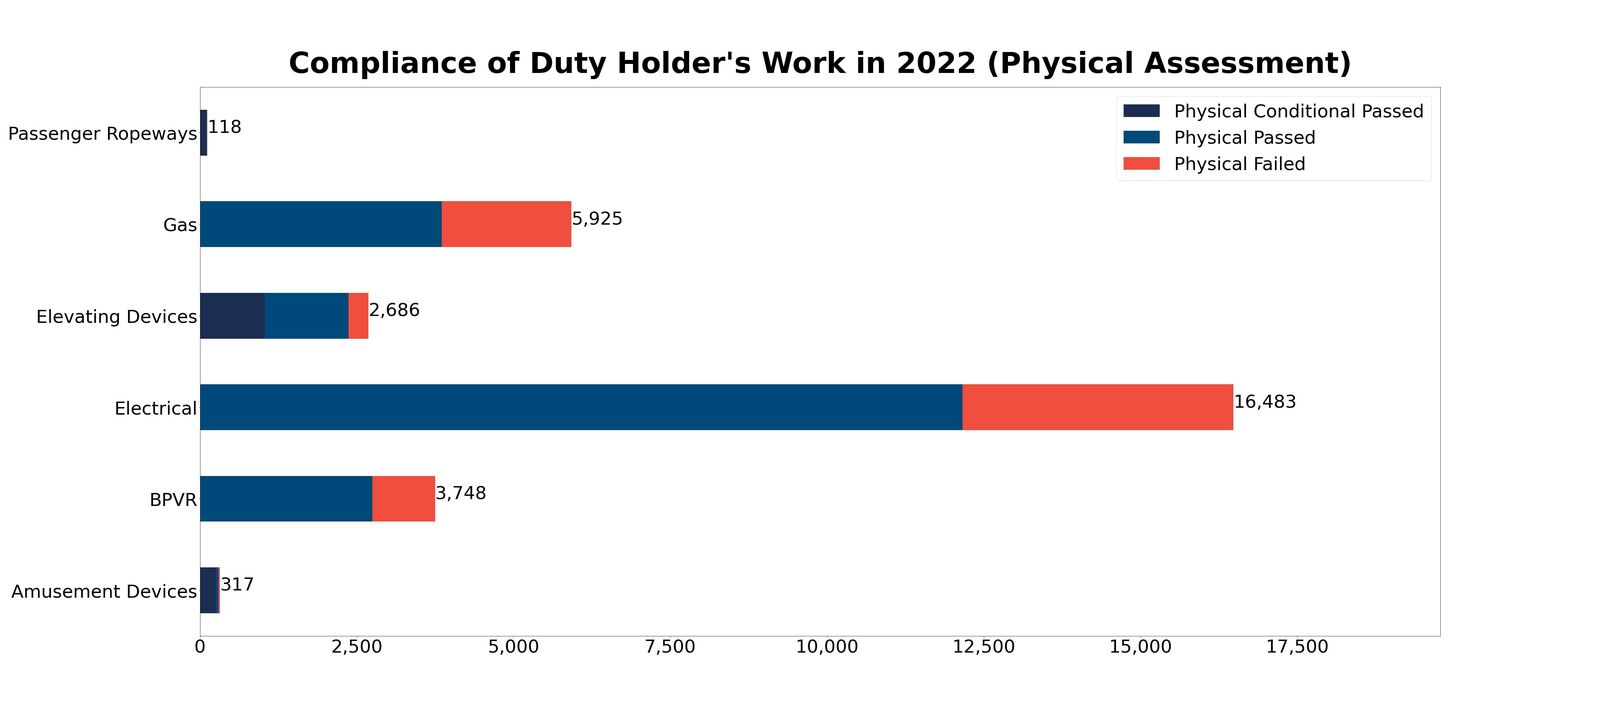 Compliance-Duty-Holder-Work-2022-Physical-Assessment.jpg